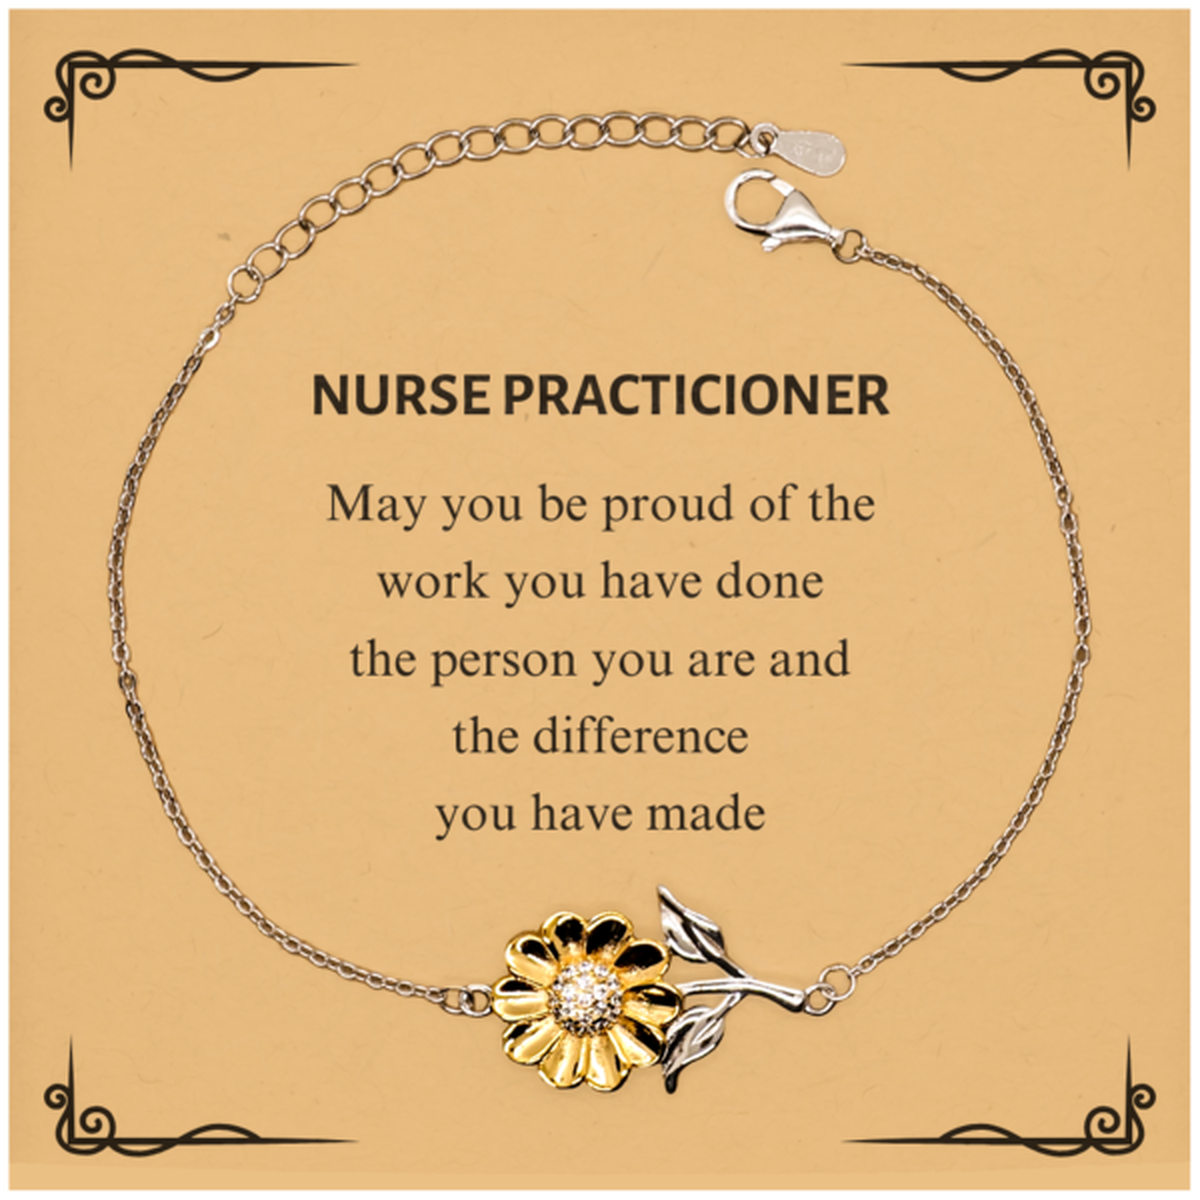 Nurse Practicioner May you be proud of the work you have done, Retirement Nurse Practicioner Sunflower Bracelet for Colleague Appreciation Gifts Amazing for Nurse Practicioner